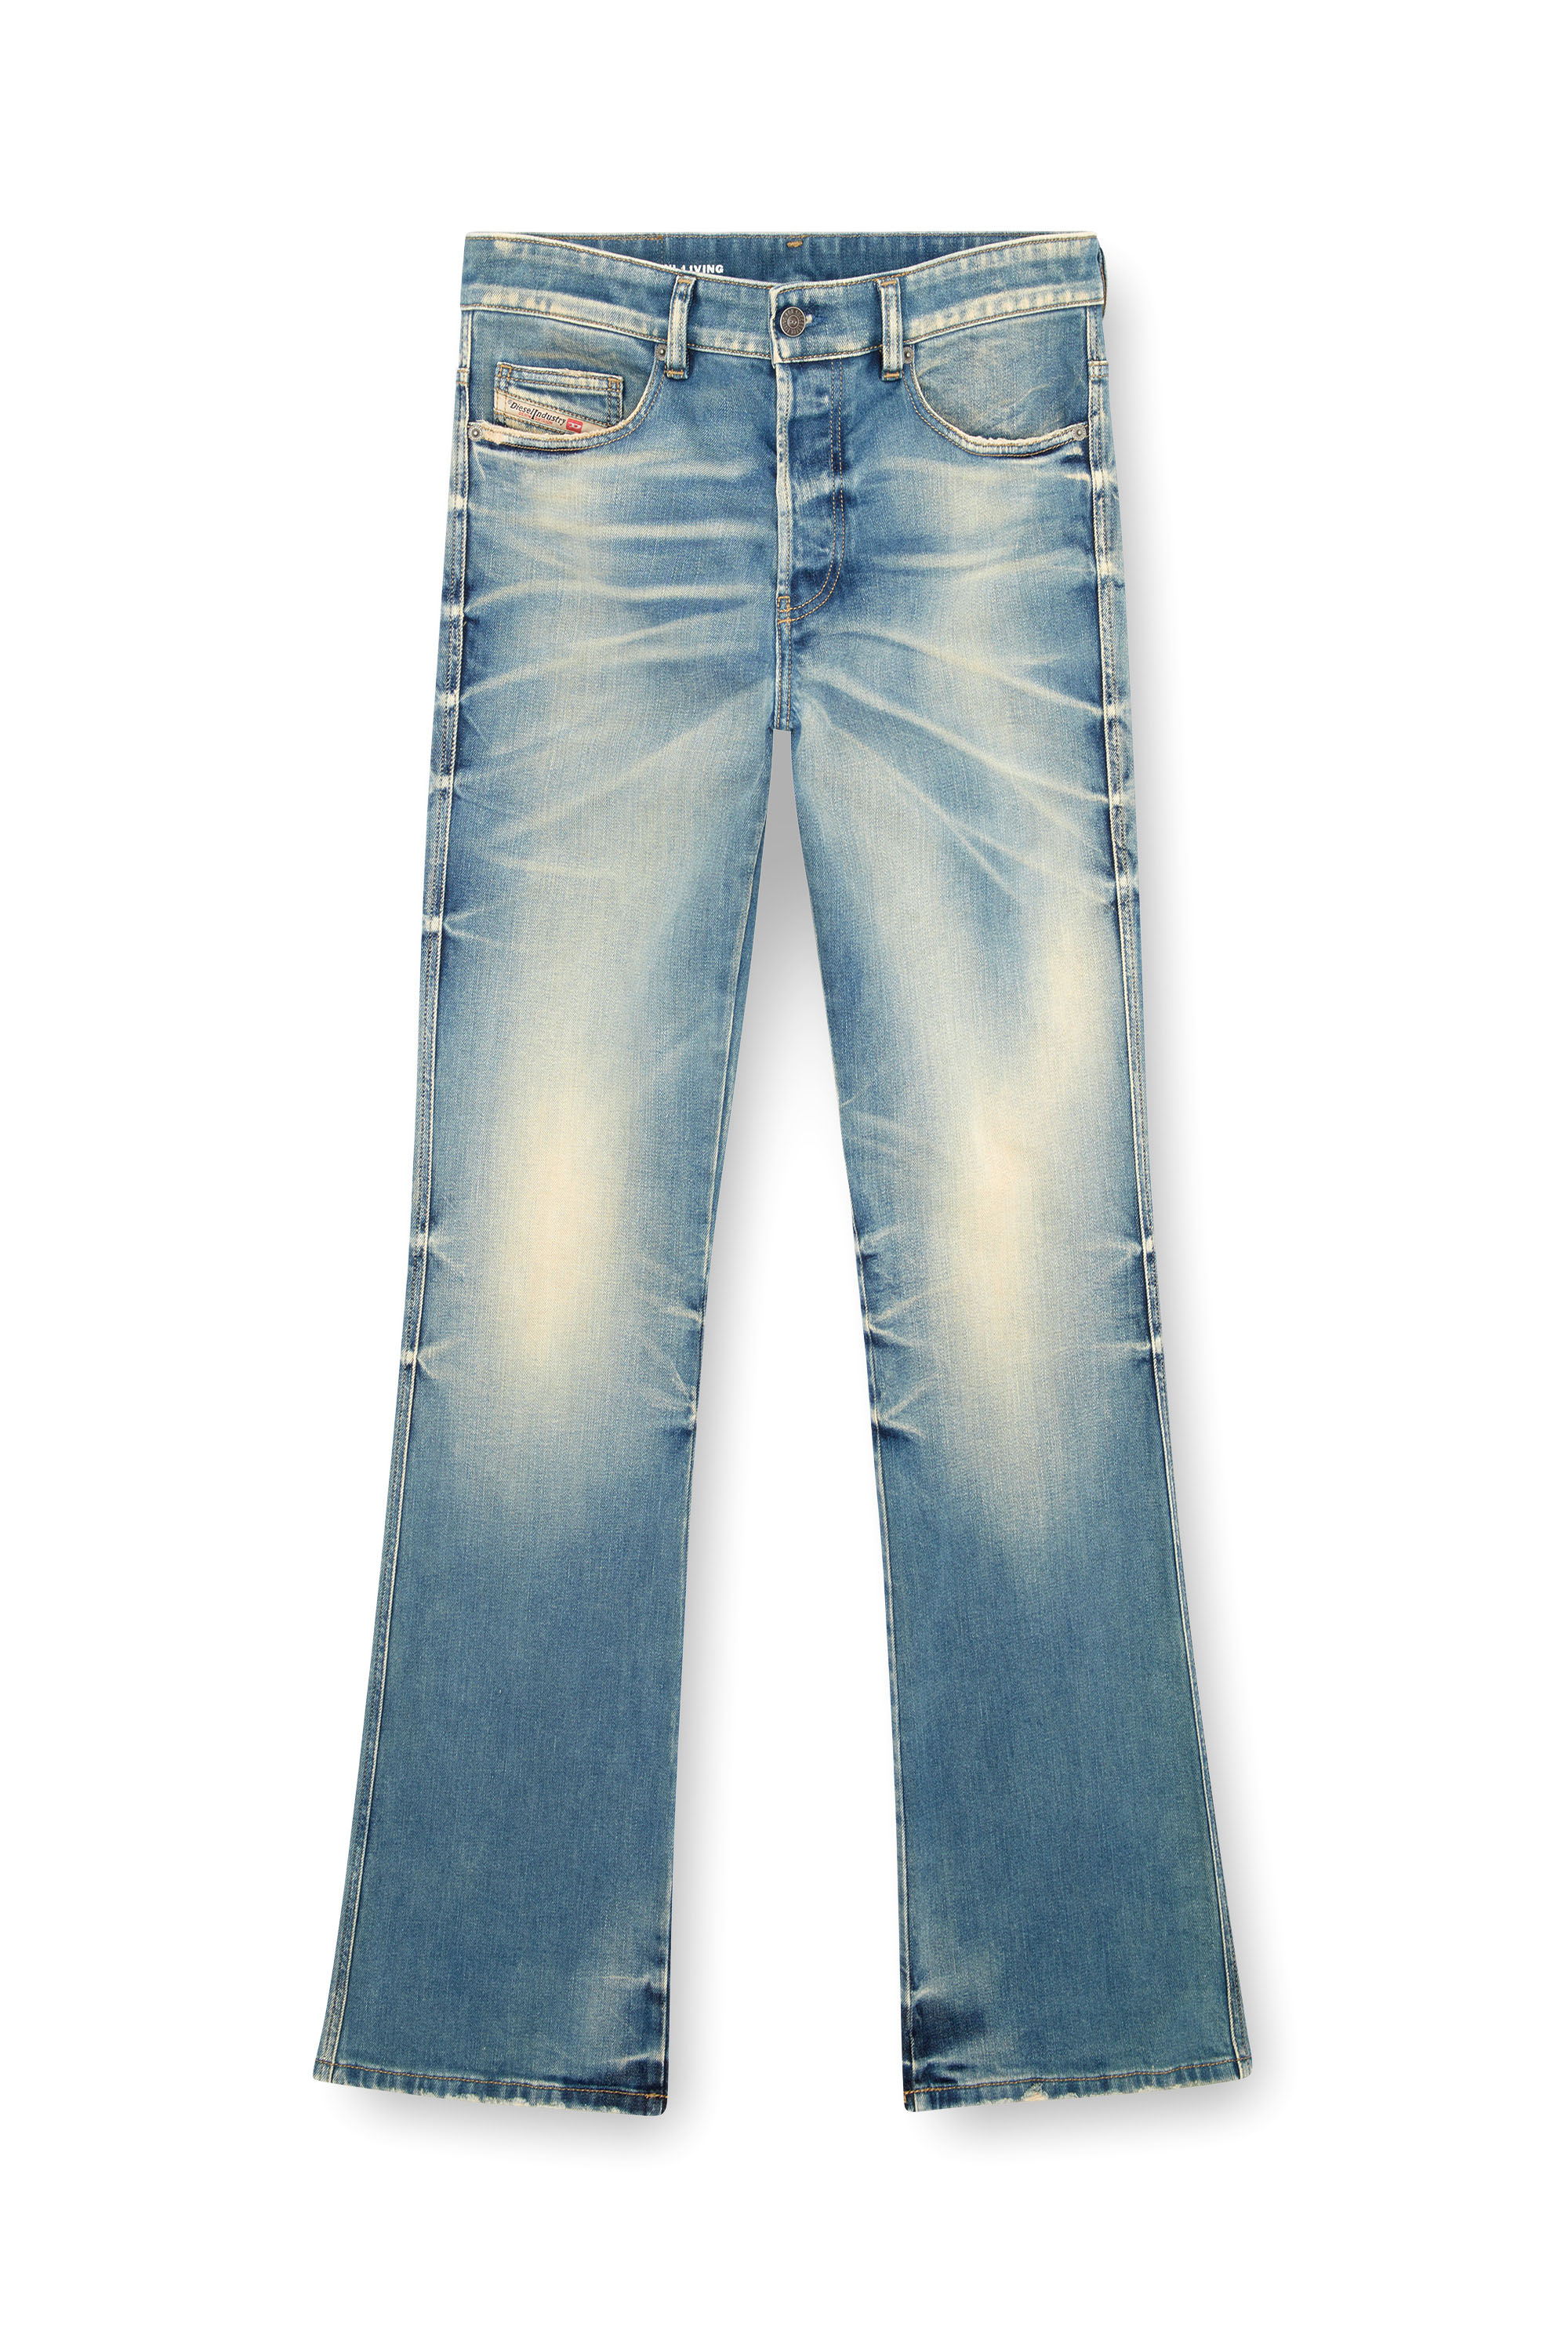 Diesel - Bootcut Jeans 1998 D-Buck 09J62, Hombre Bootcut Jeans - 1998 D-Buck in Azul marino - Image 5